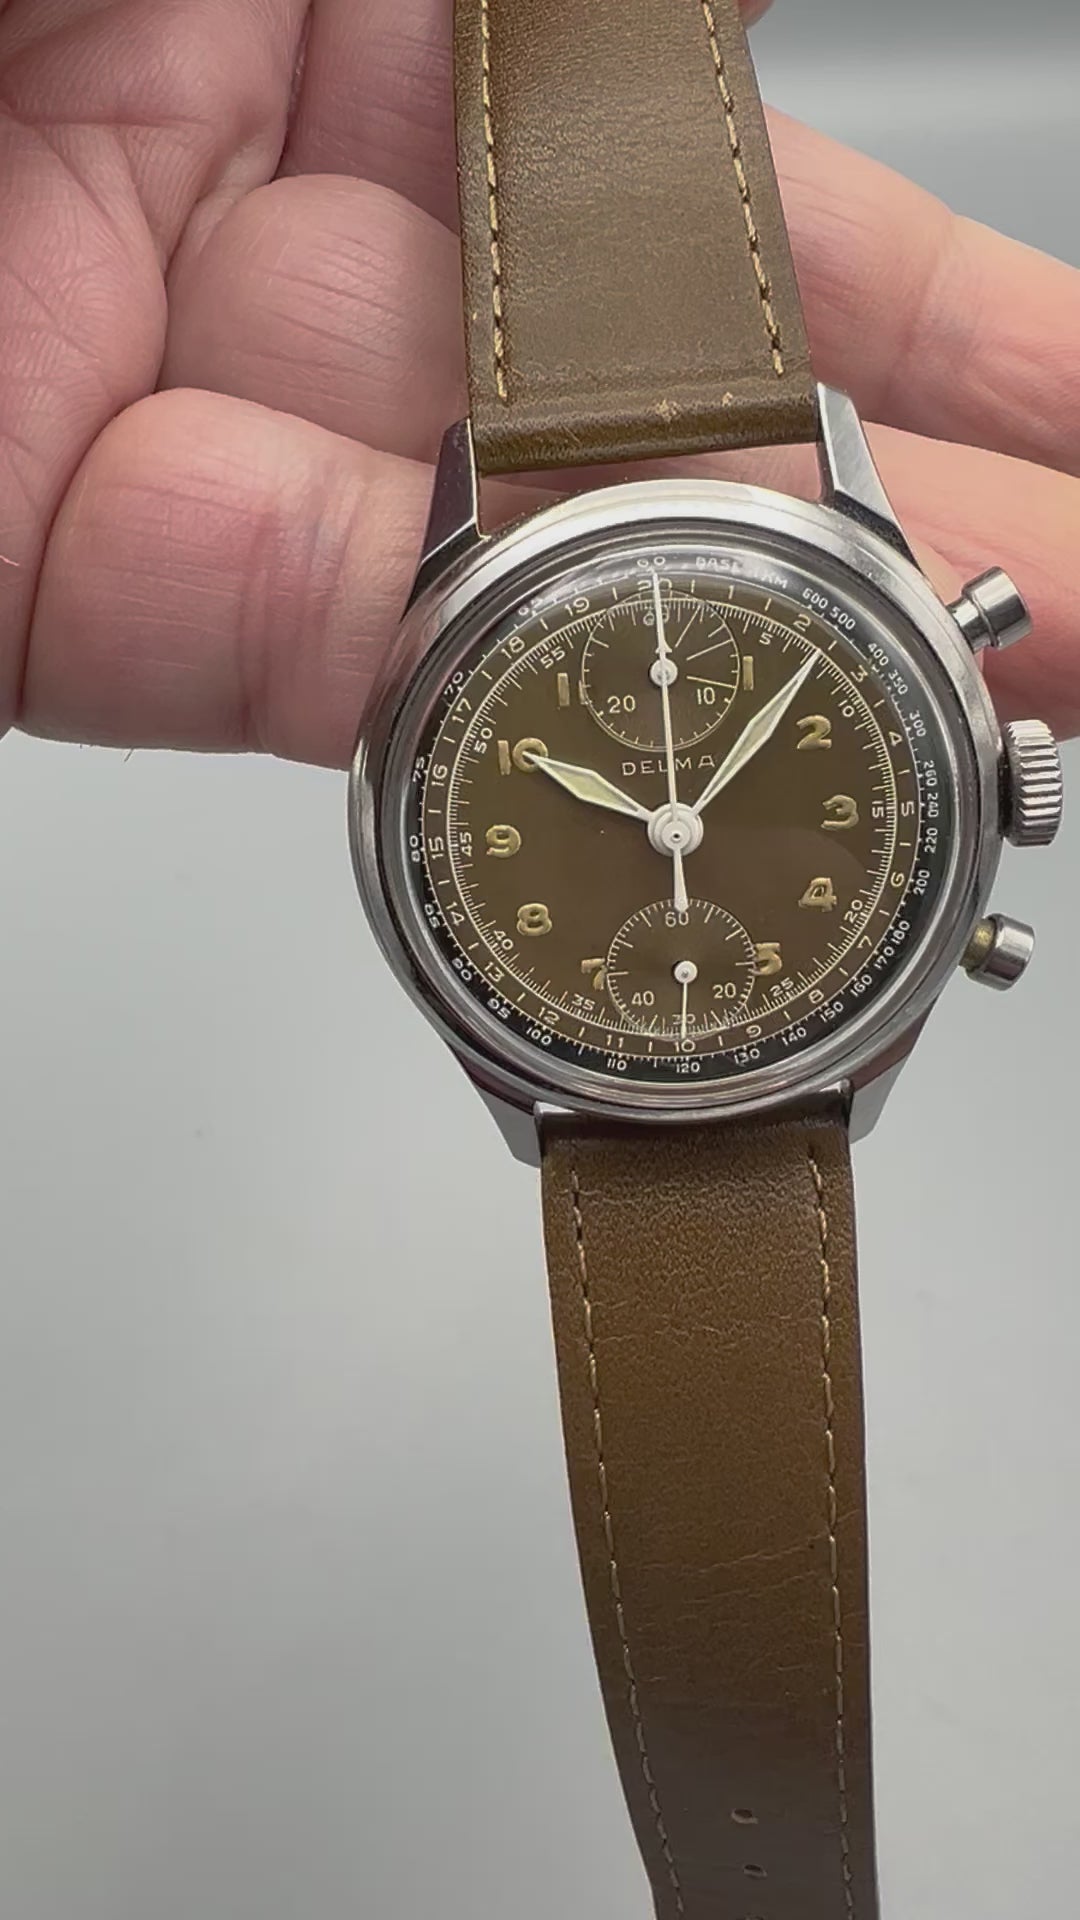 Venus Rare 1960's Vintage Mechanical Hand-Winding Round-Date Men's Watch |  eBay